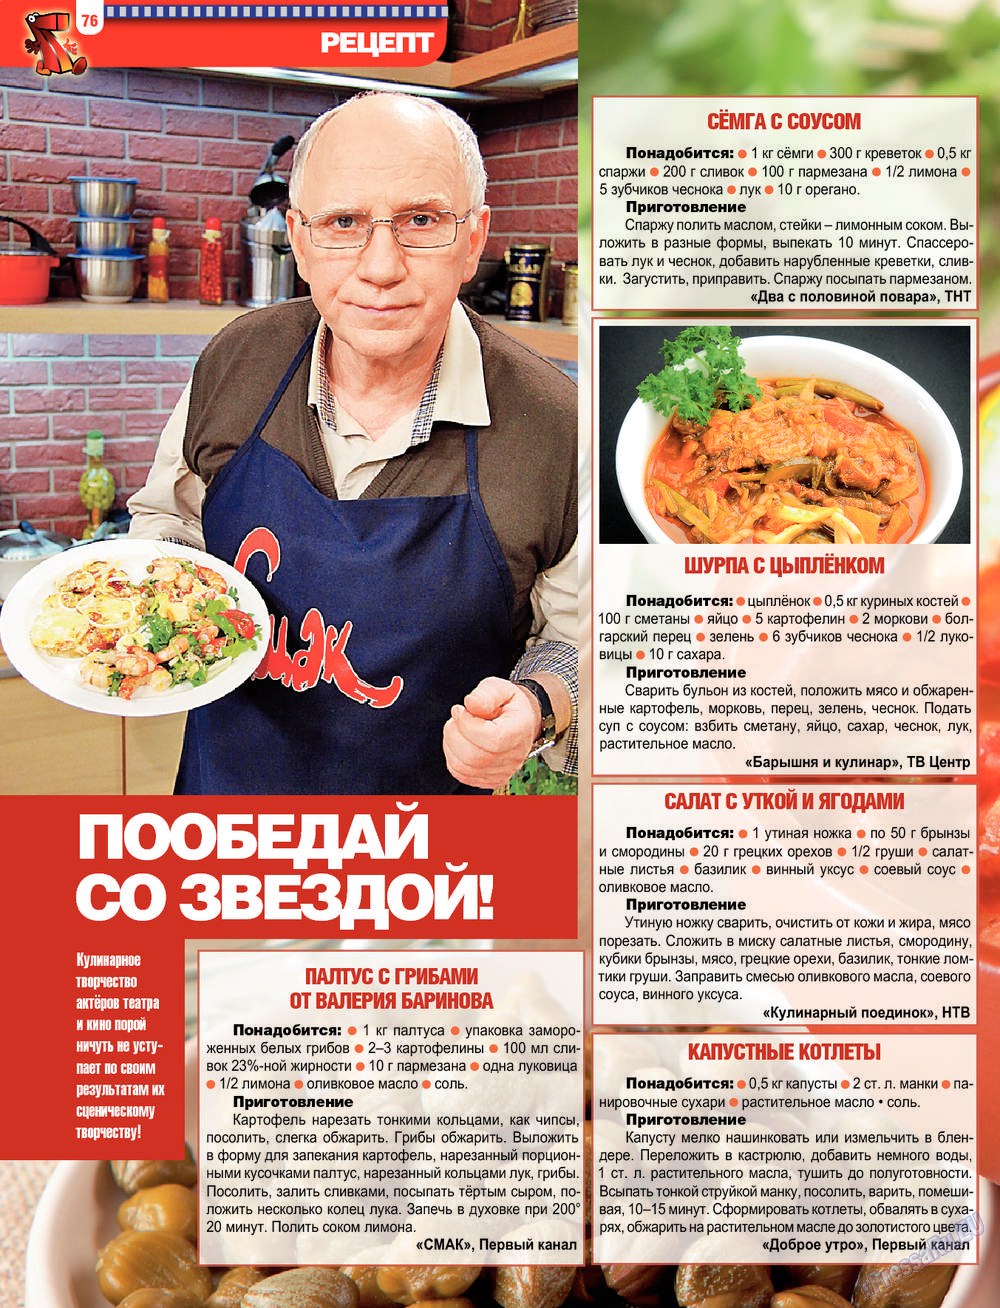 7плюс7я (журнал). 2013 год, номер 7, стр. 76